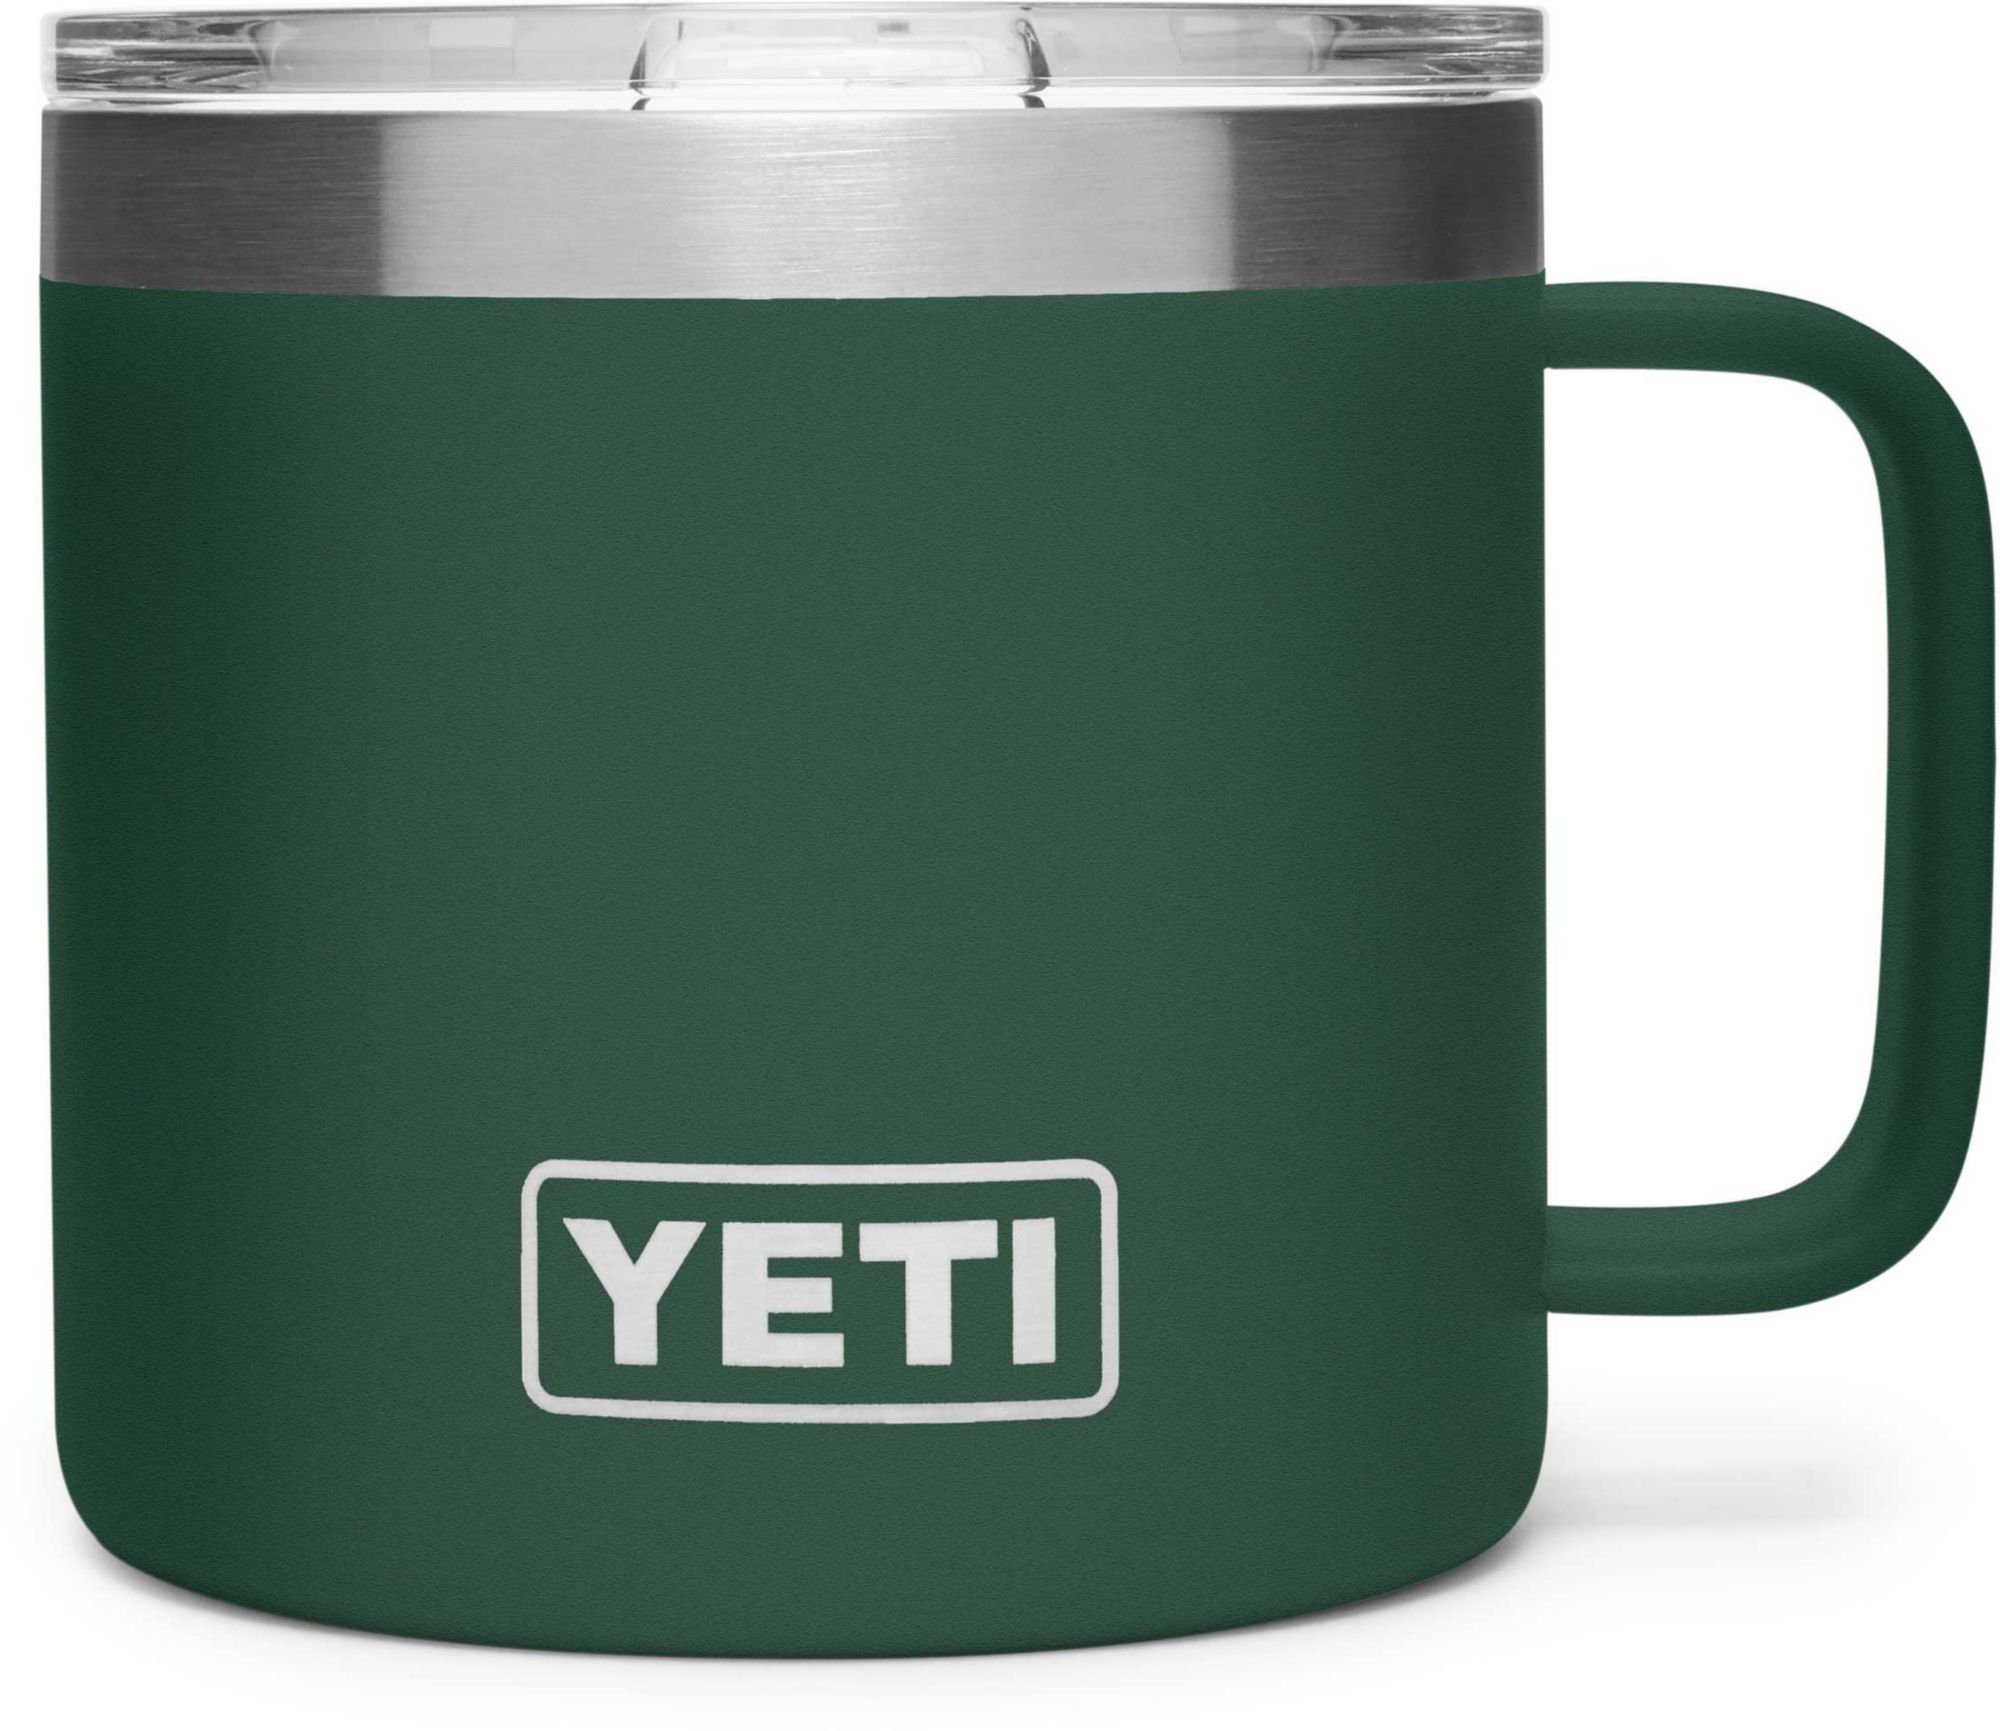 yeti coffee mug amazon